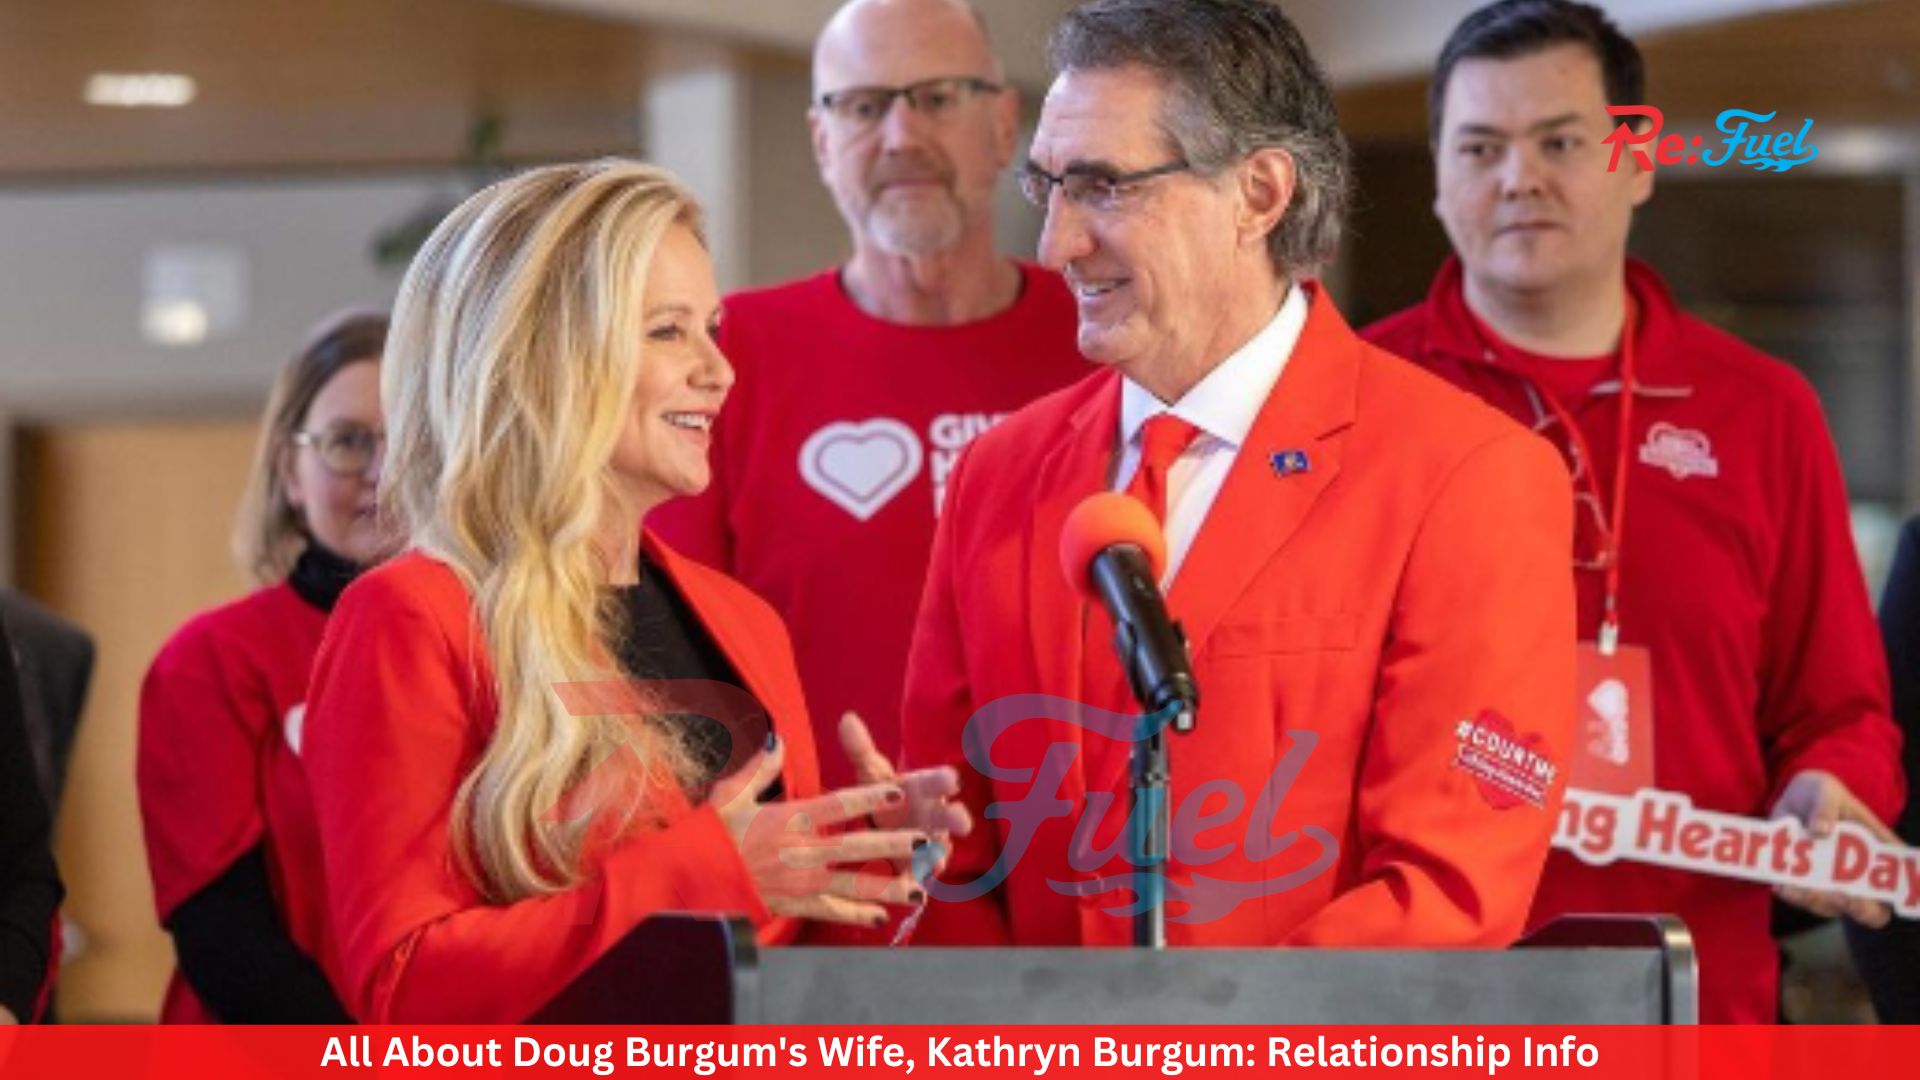 All About Doug Burgum's Wife, Kathryn Burgum: Relationship Info